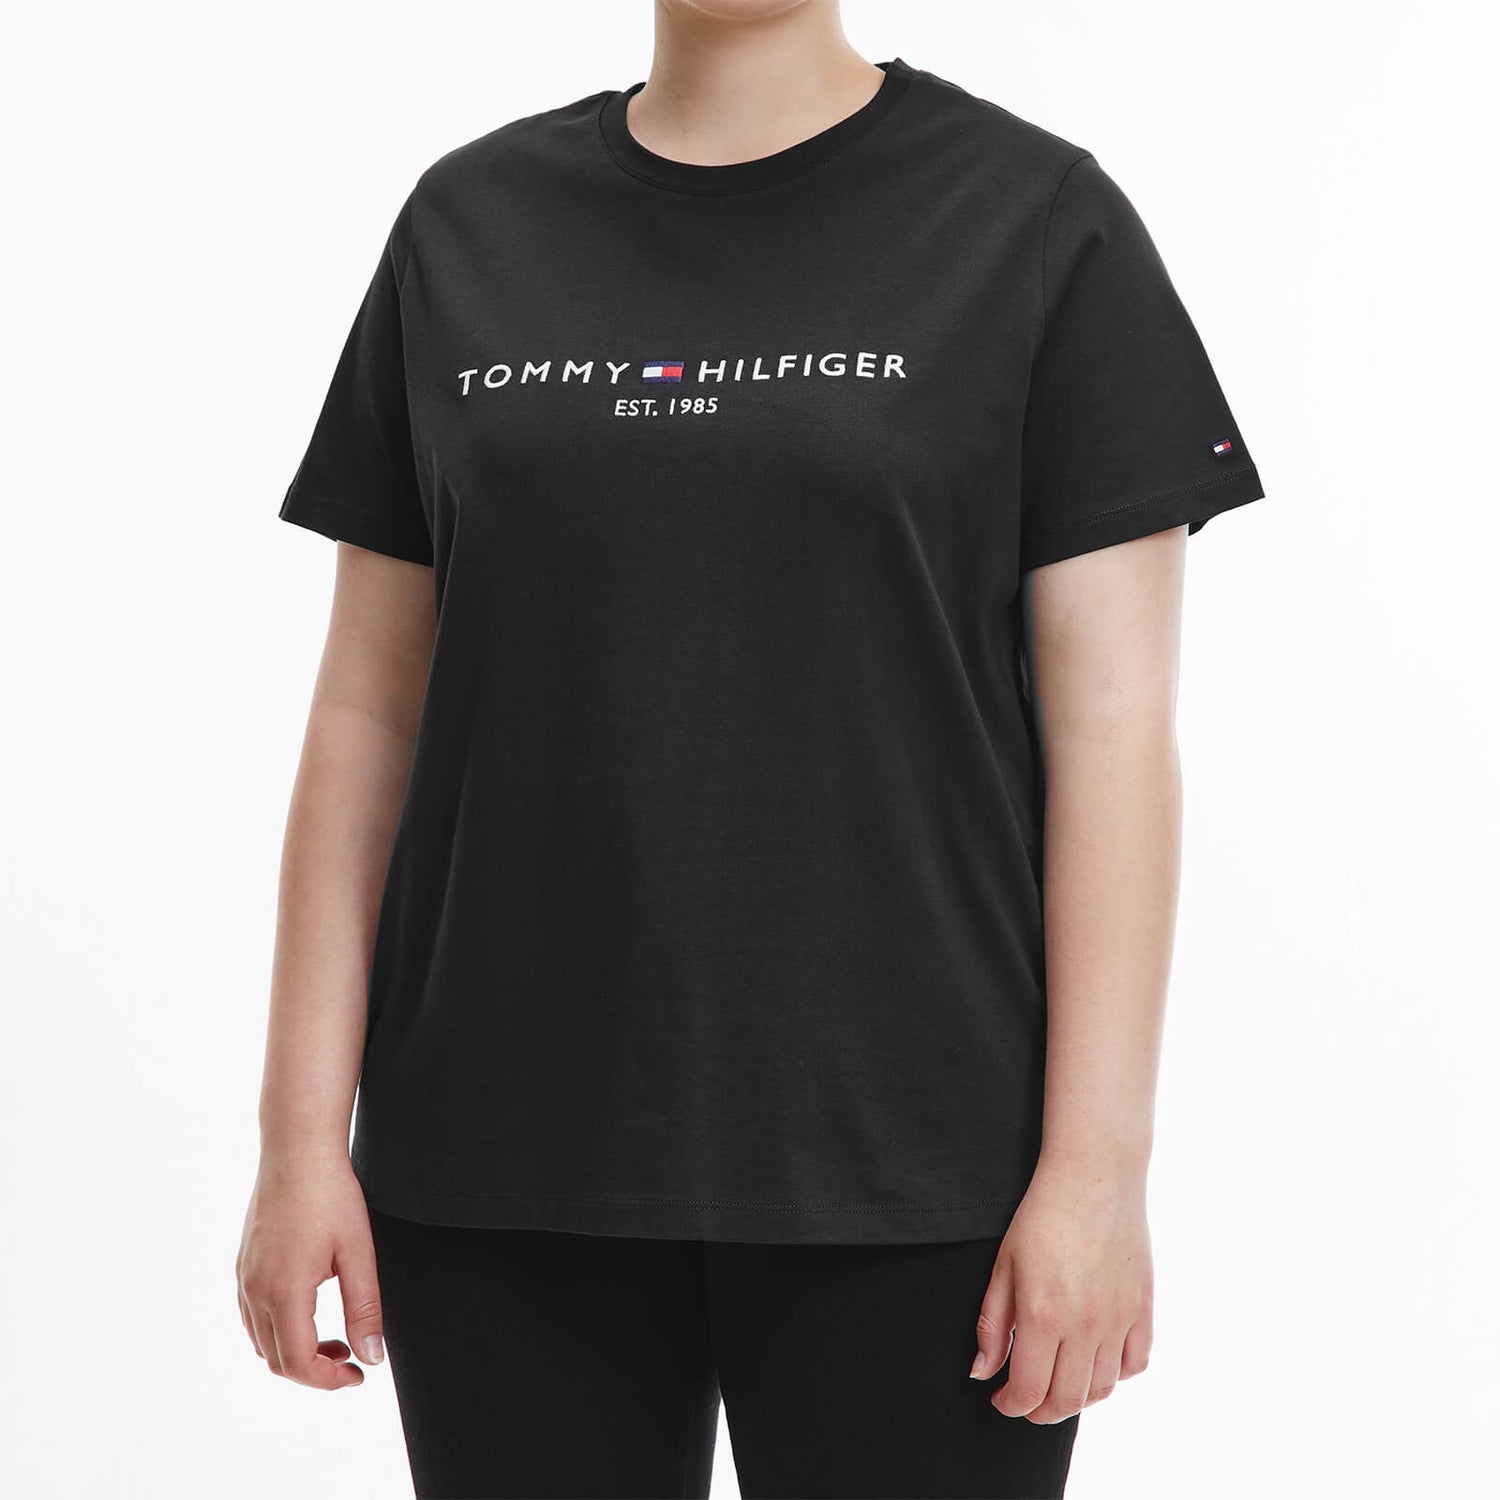 Tommy Hilfiger Women's Curve Regular Hilfiger Crewneck T-Shirt - Black